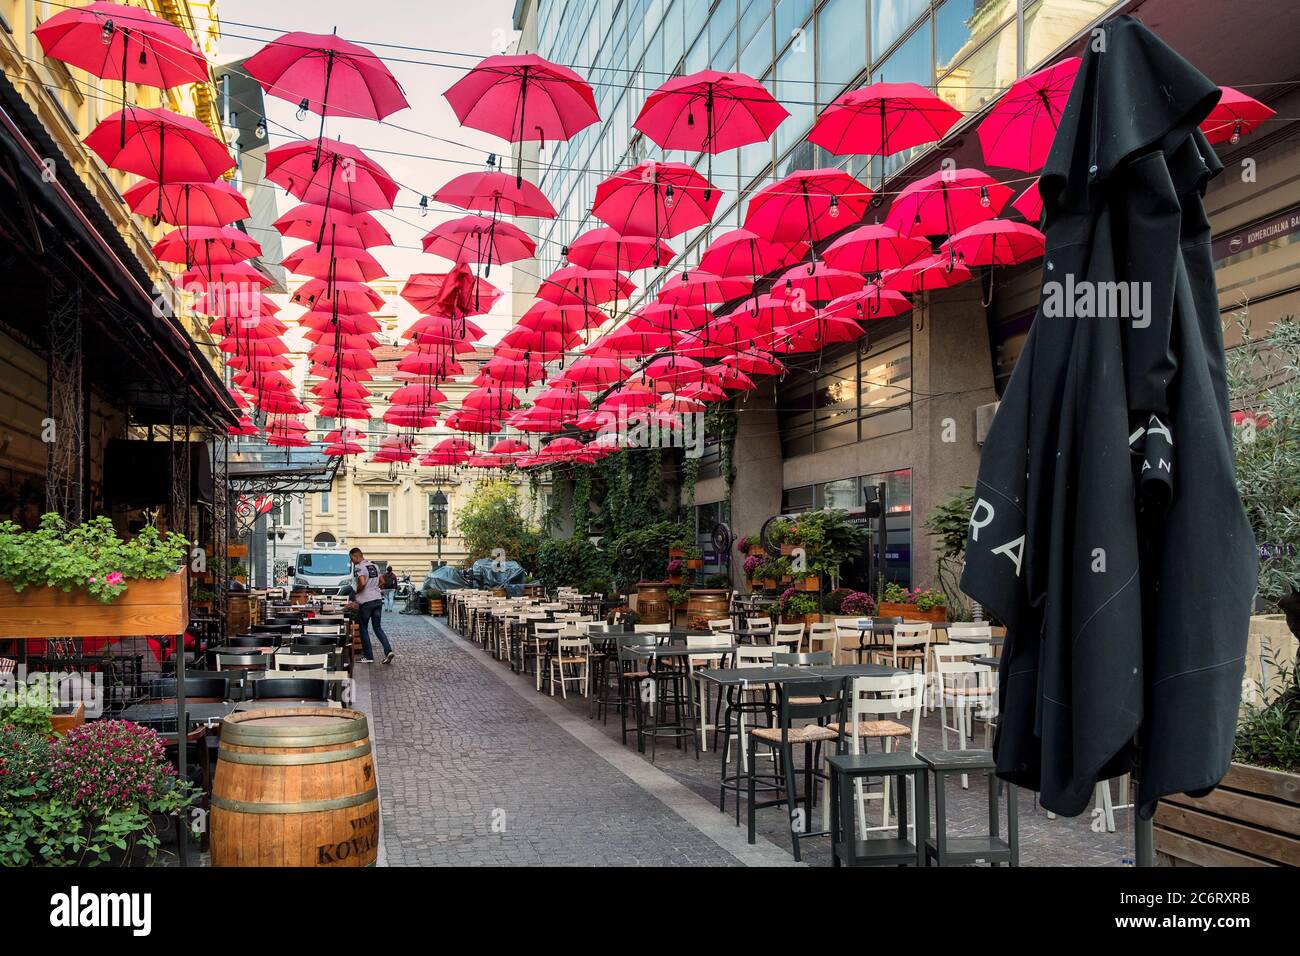 Belgrade / Serbia - October 6, 2018: Red umbrellas above the open-air restaurant in King Peter street, in old bohemian part of Serbian capital Belgrad Stock Photo